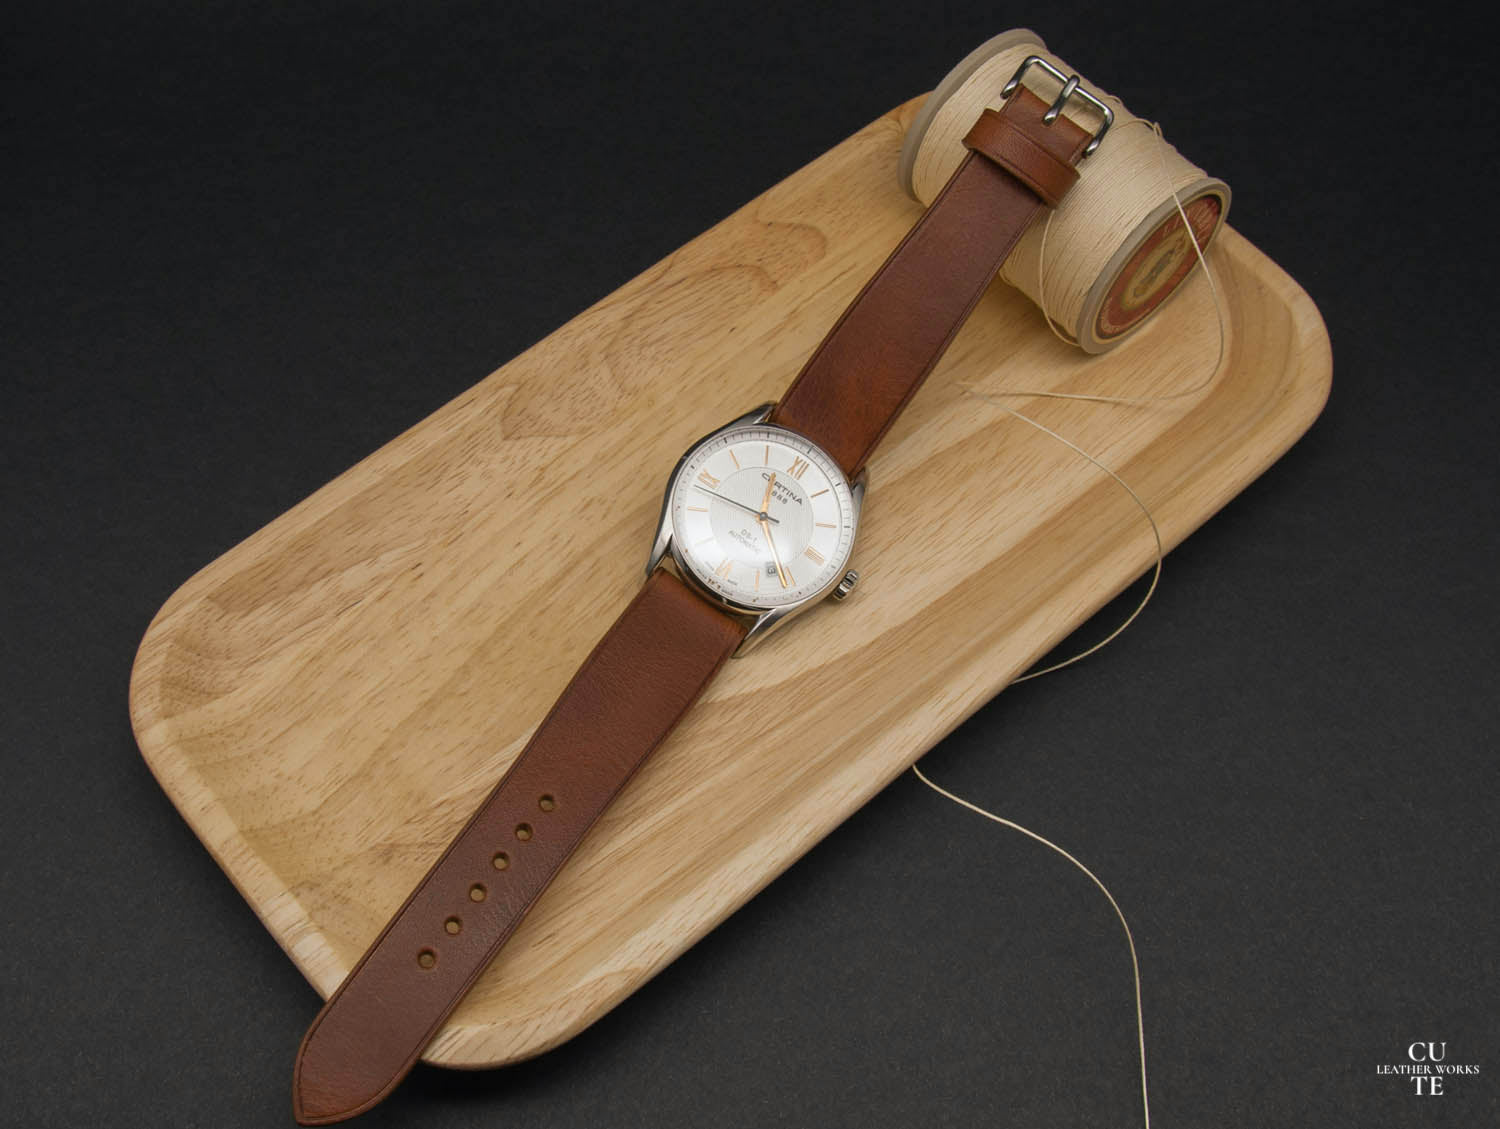 Badalassi Carlo Wax Cognac Leather Watch Strap, Non-stitched